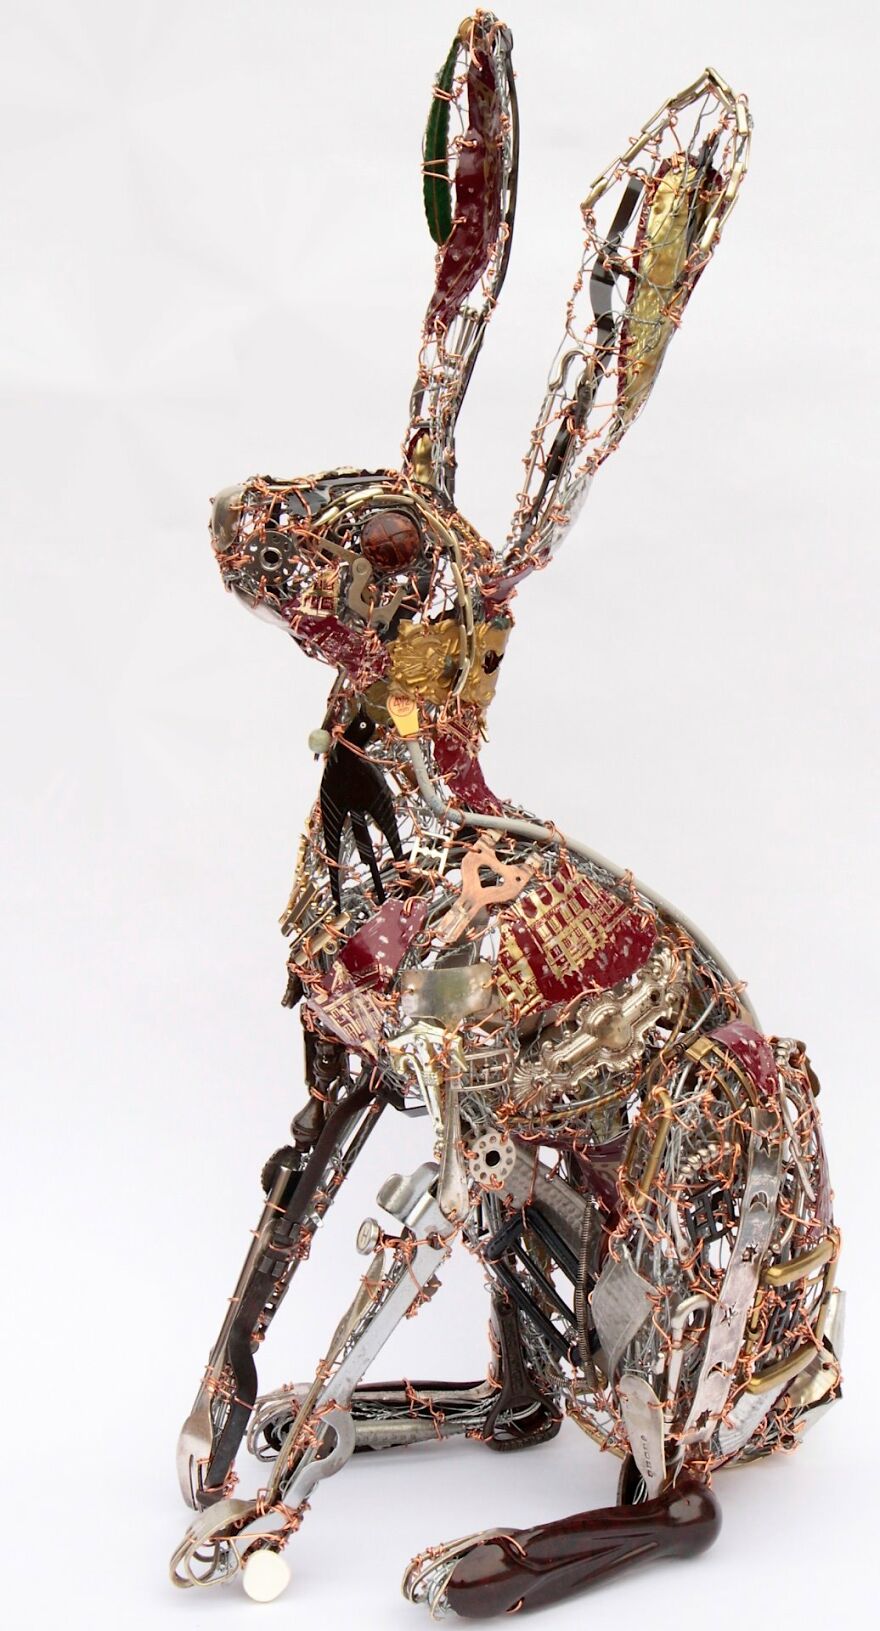 Barbara Franc artista reutiliza materiais e cria esculturas realistas de animais 21